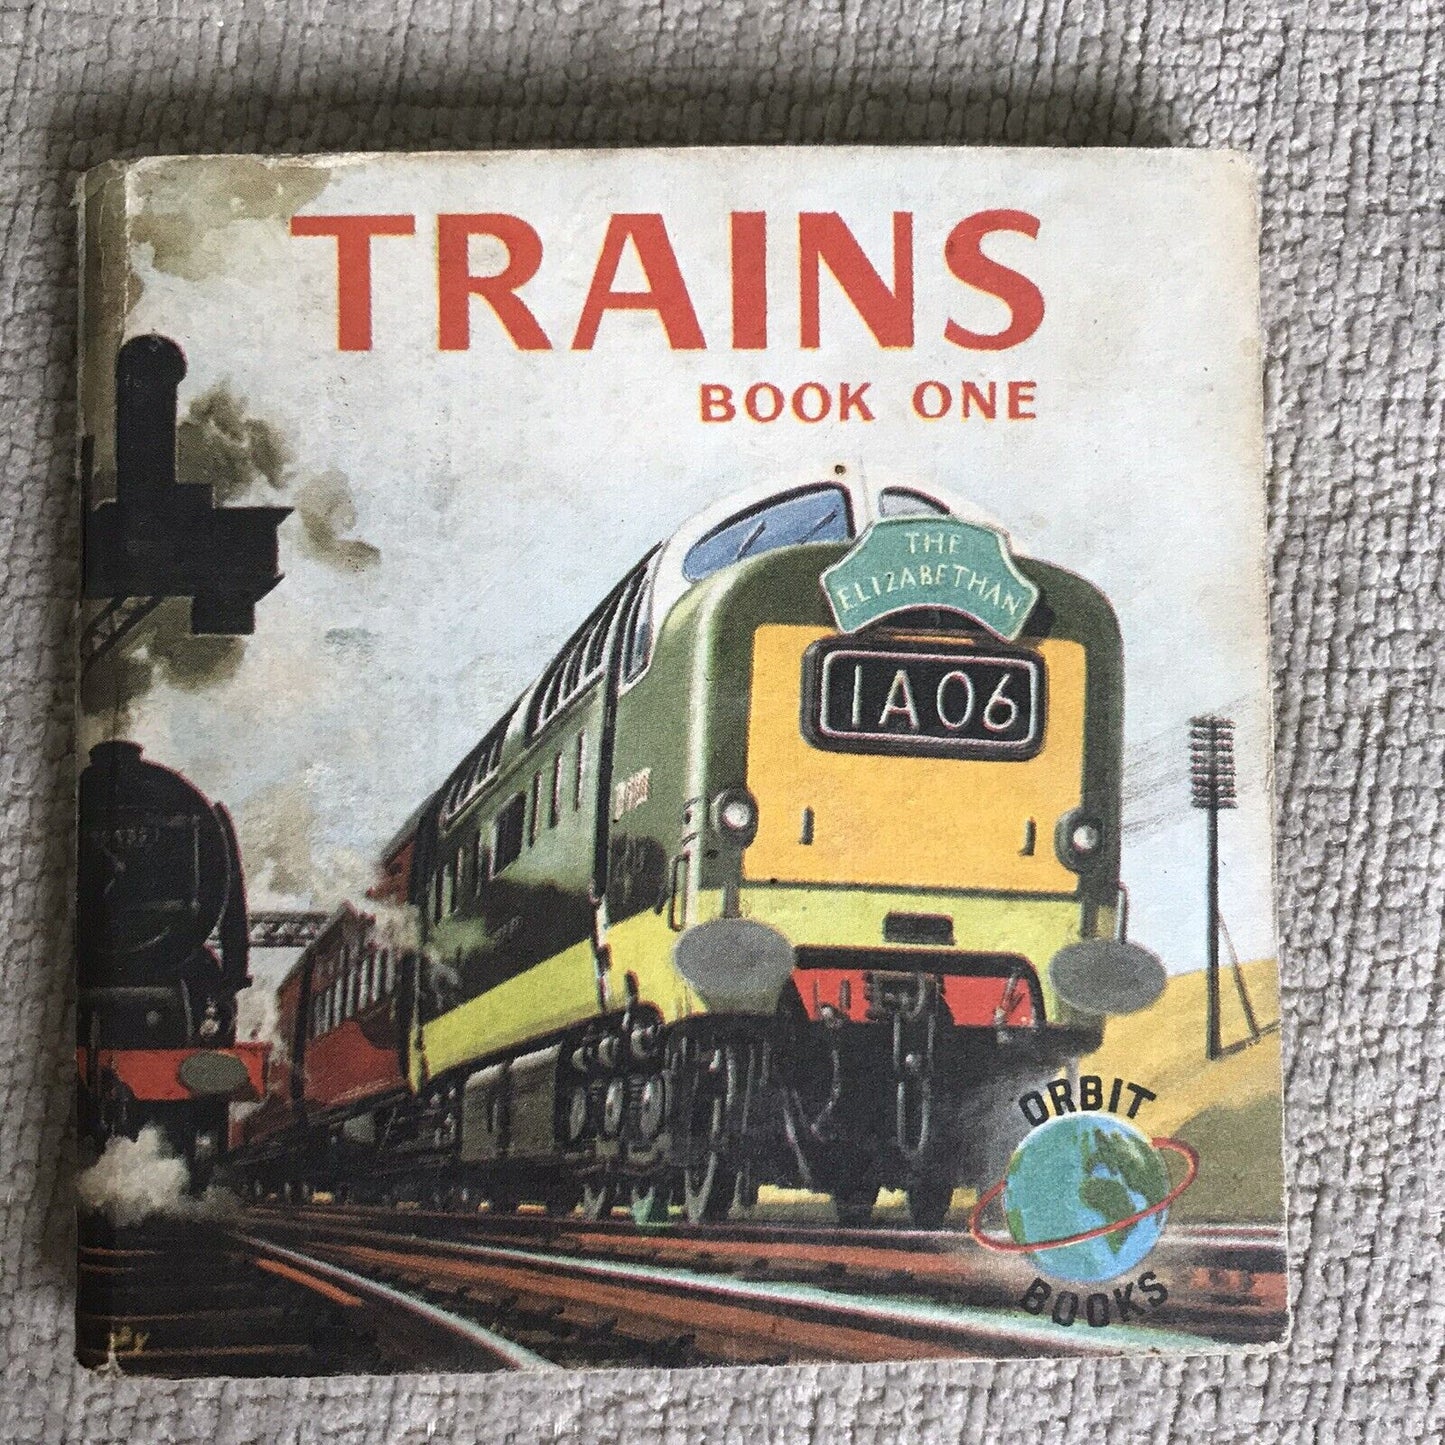 1970’s Trains Book 1 (Orbit Books) Published Collins